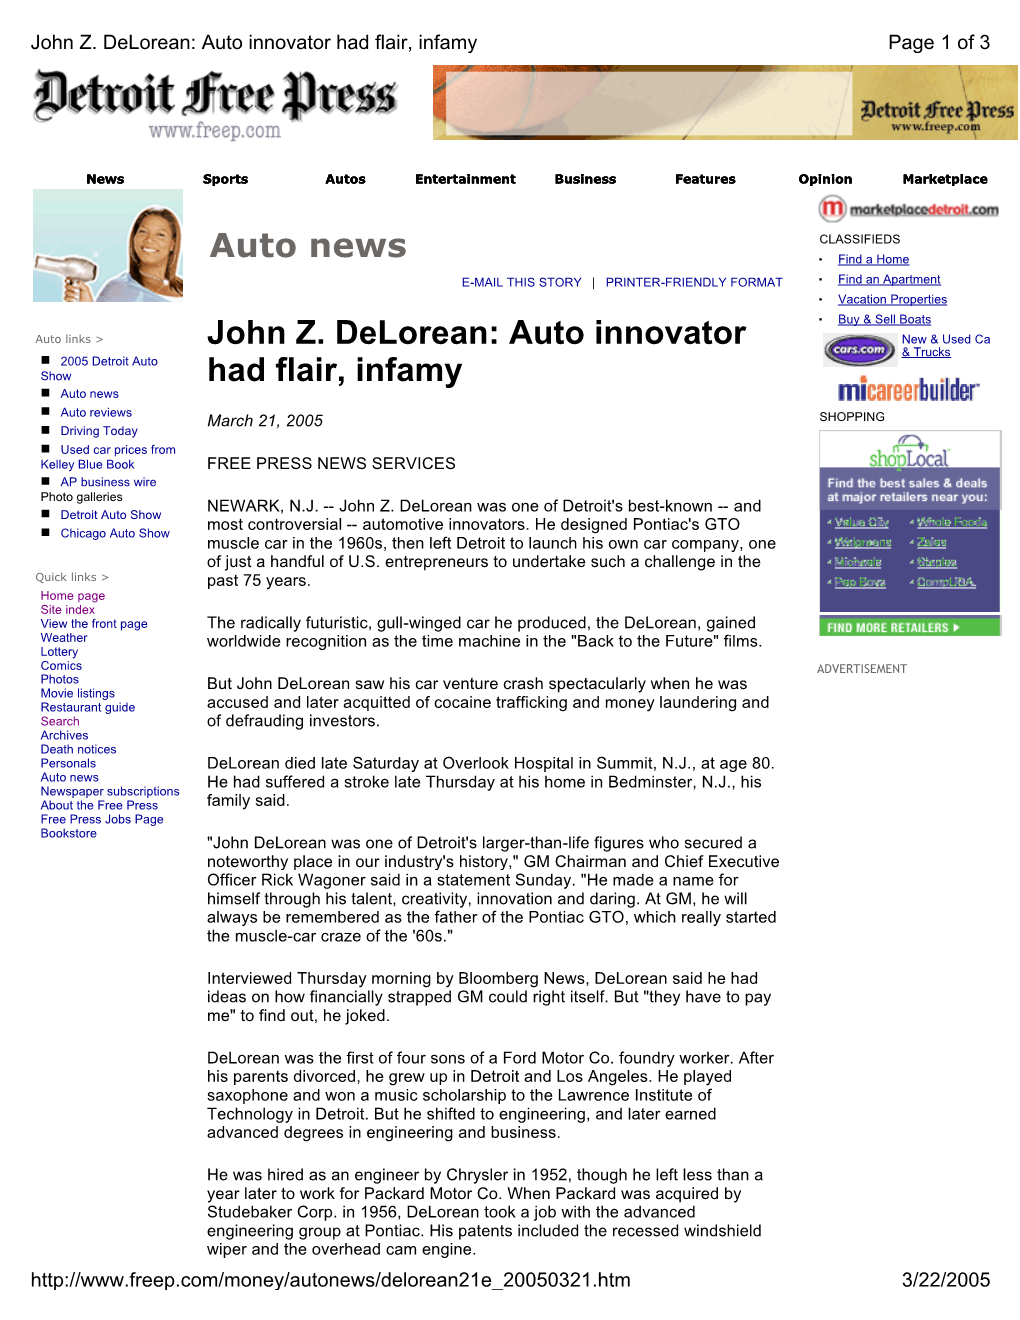 John Z. Delorean: Auto Innovator Had Flair, Infamy Page 1 of 3